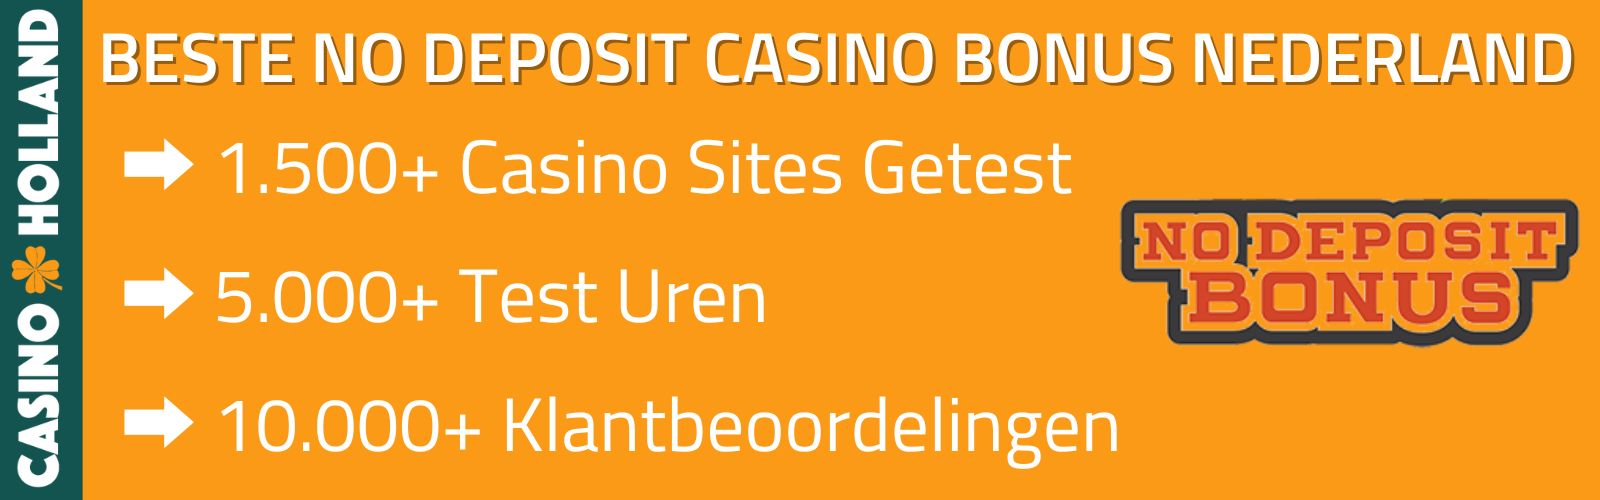 no deposit casino NL